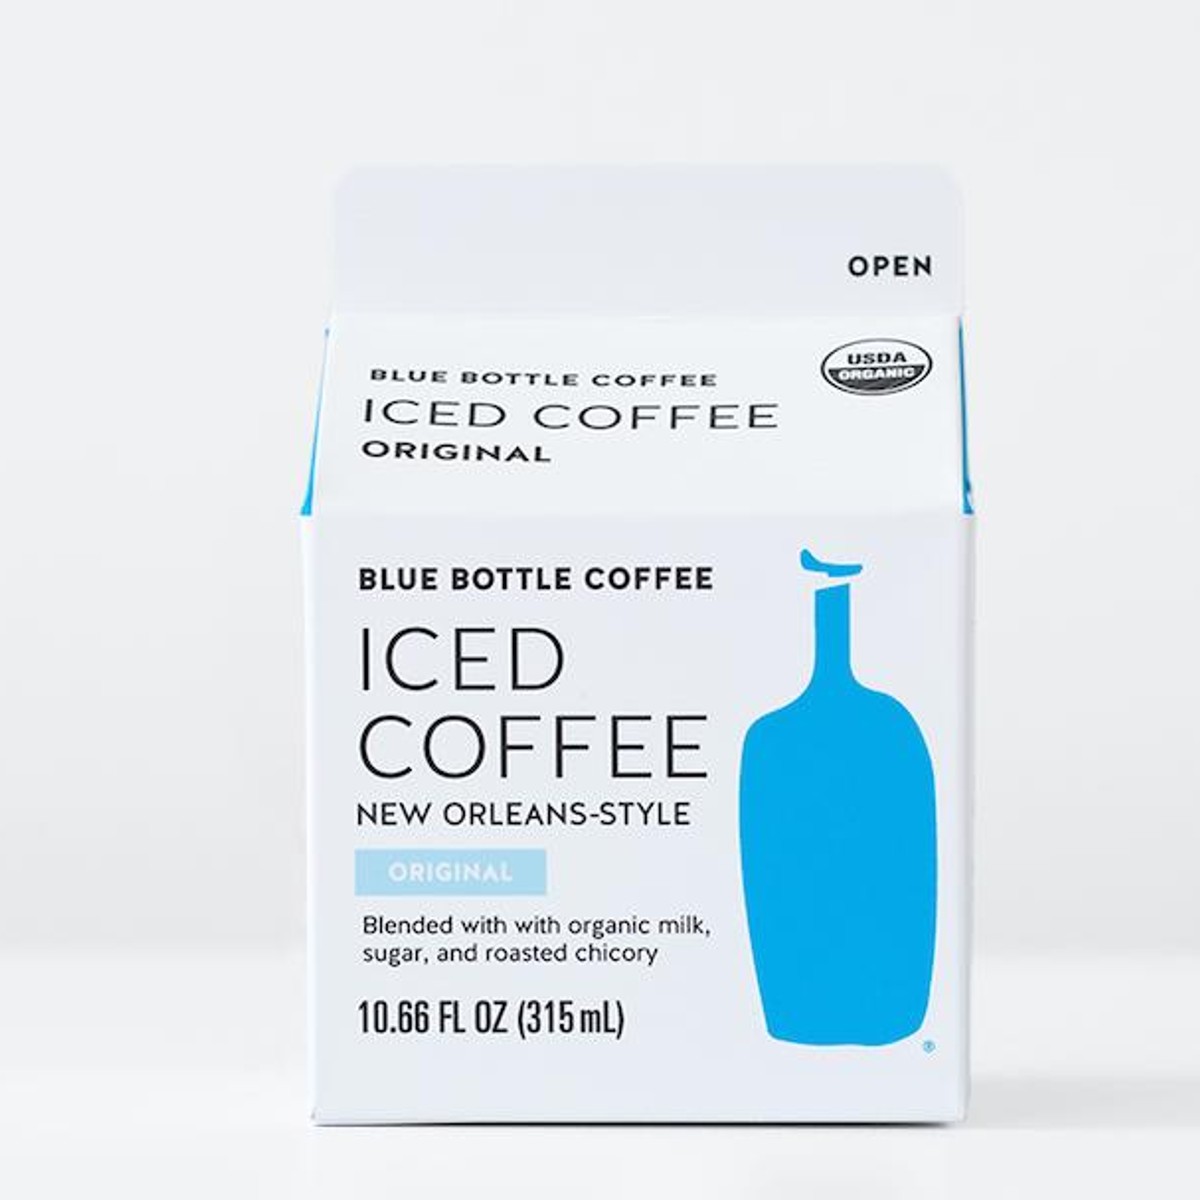 Blue Bottle Coffee Dairy-Free & Vegan Menu Guide & Reviews